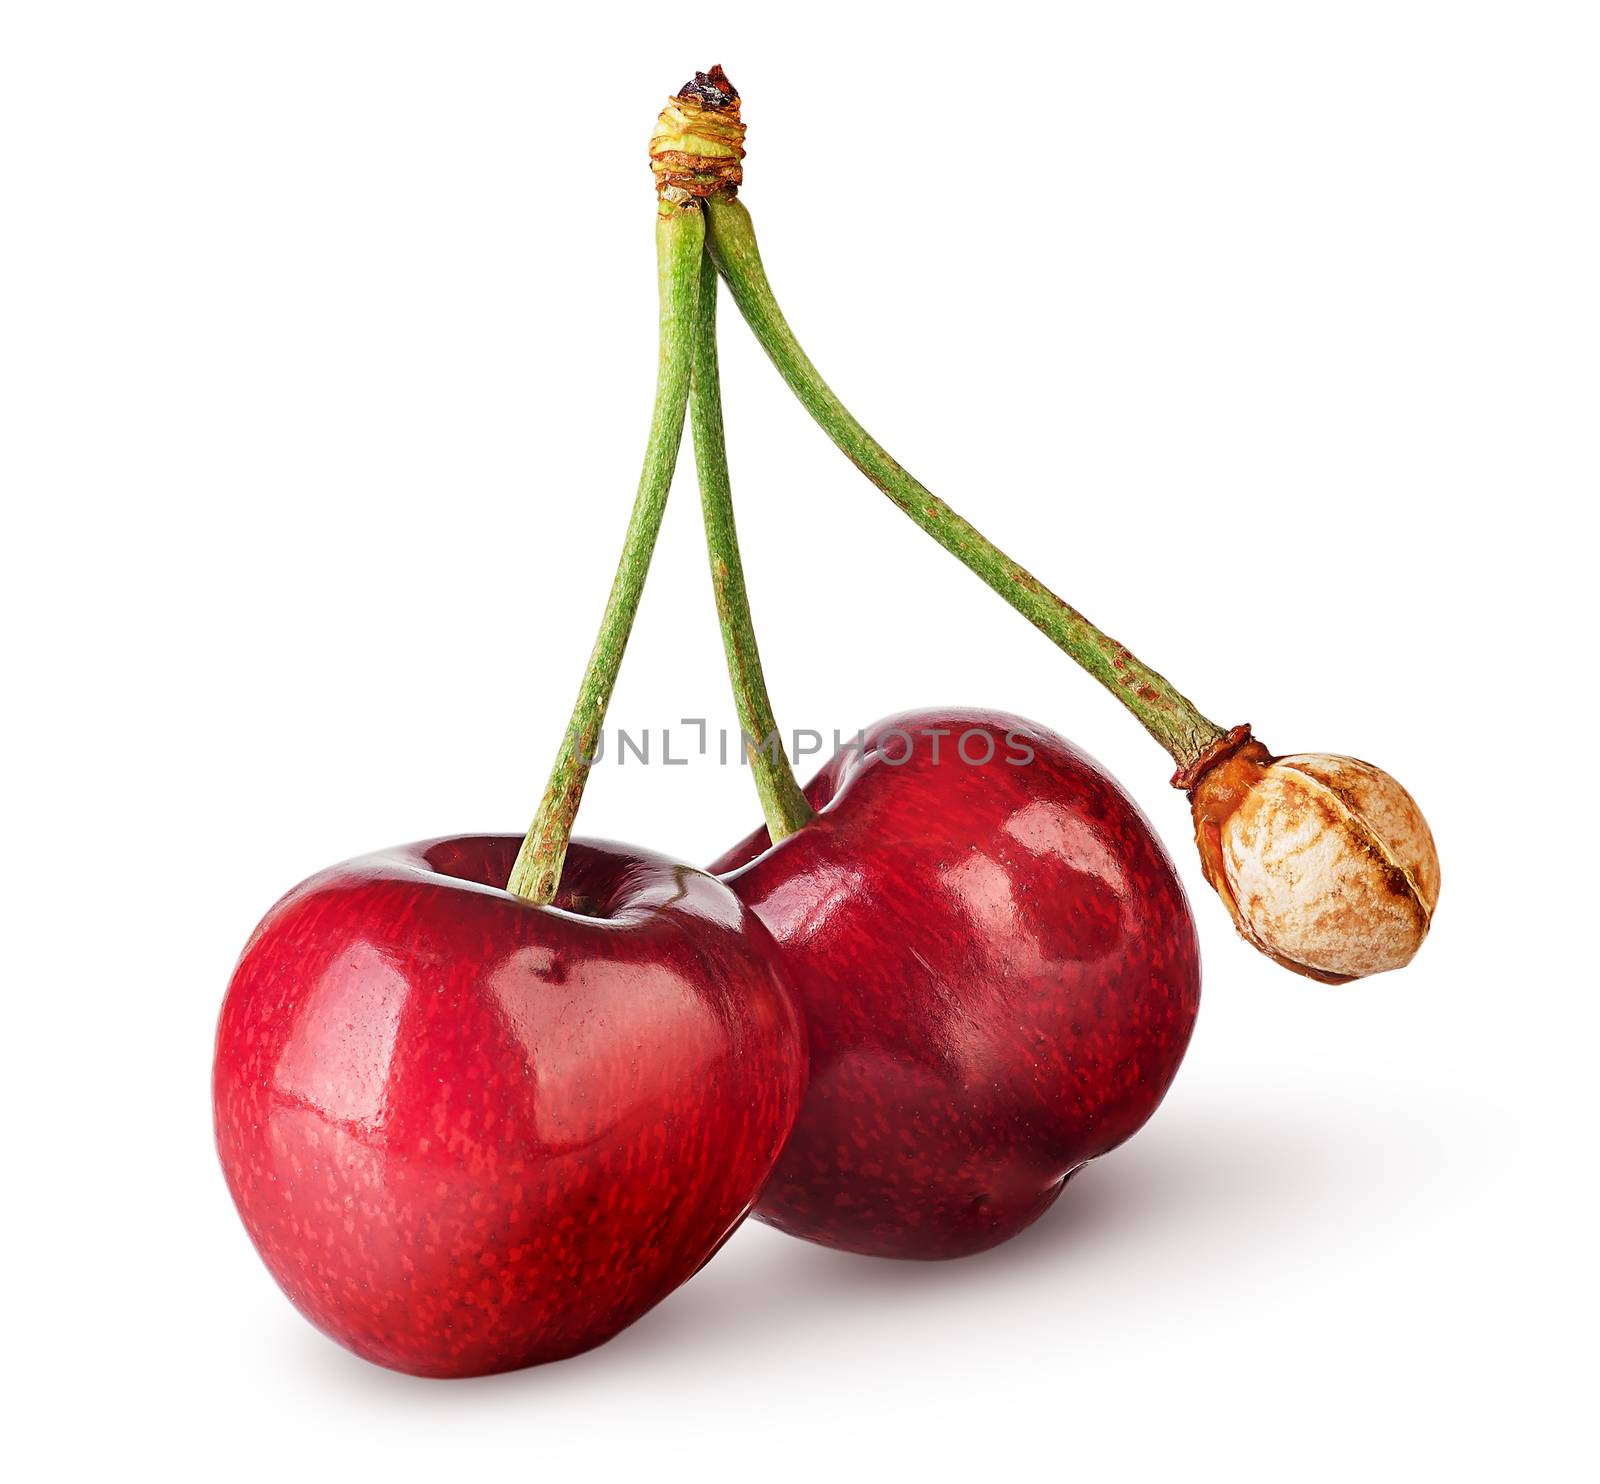 Pair of sweet cherries with bone by Cipariss